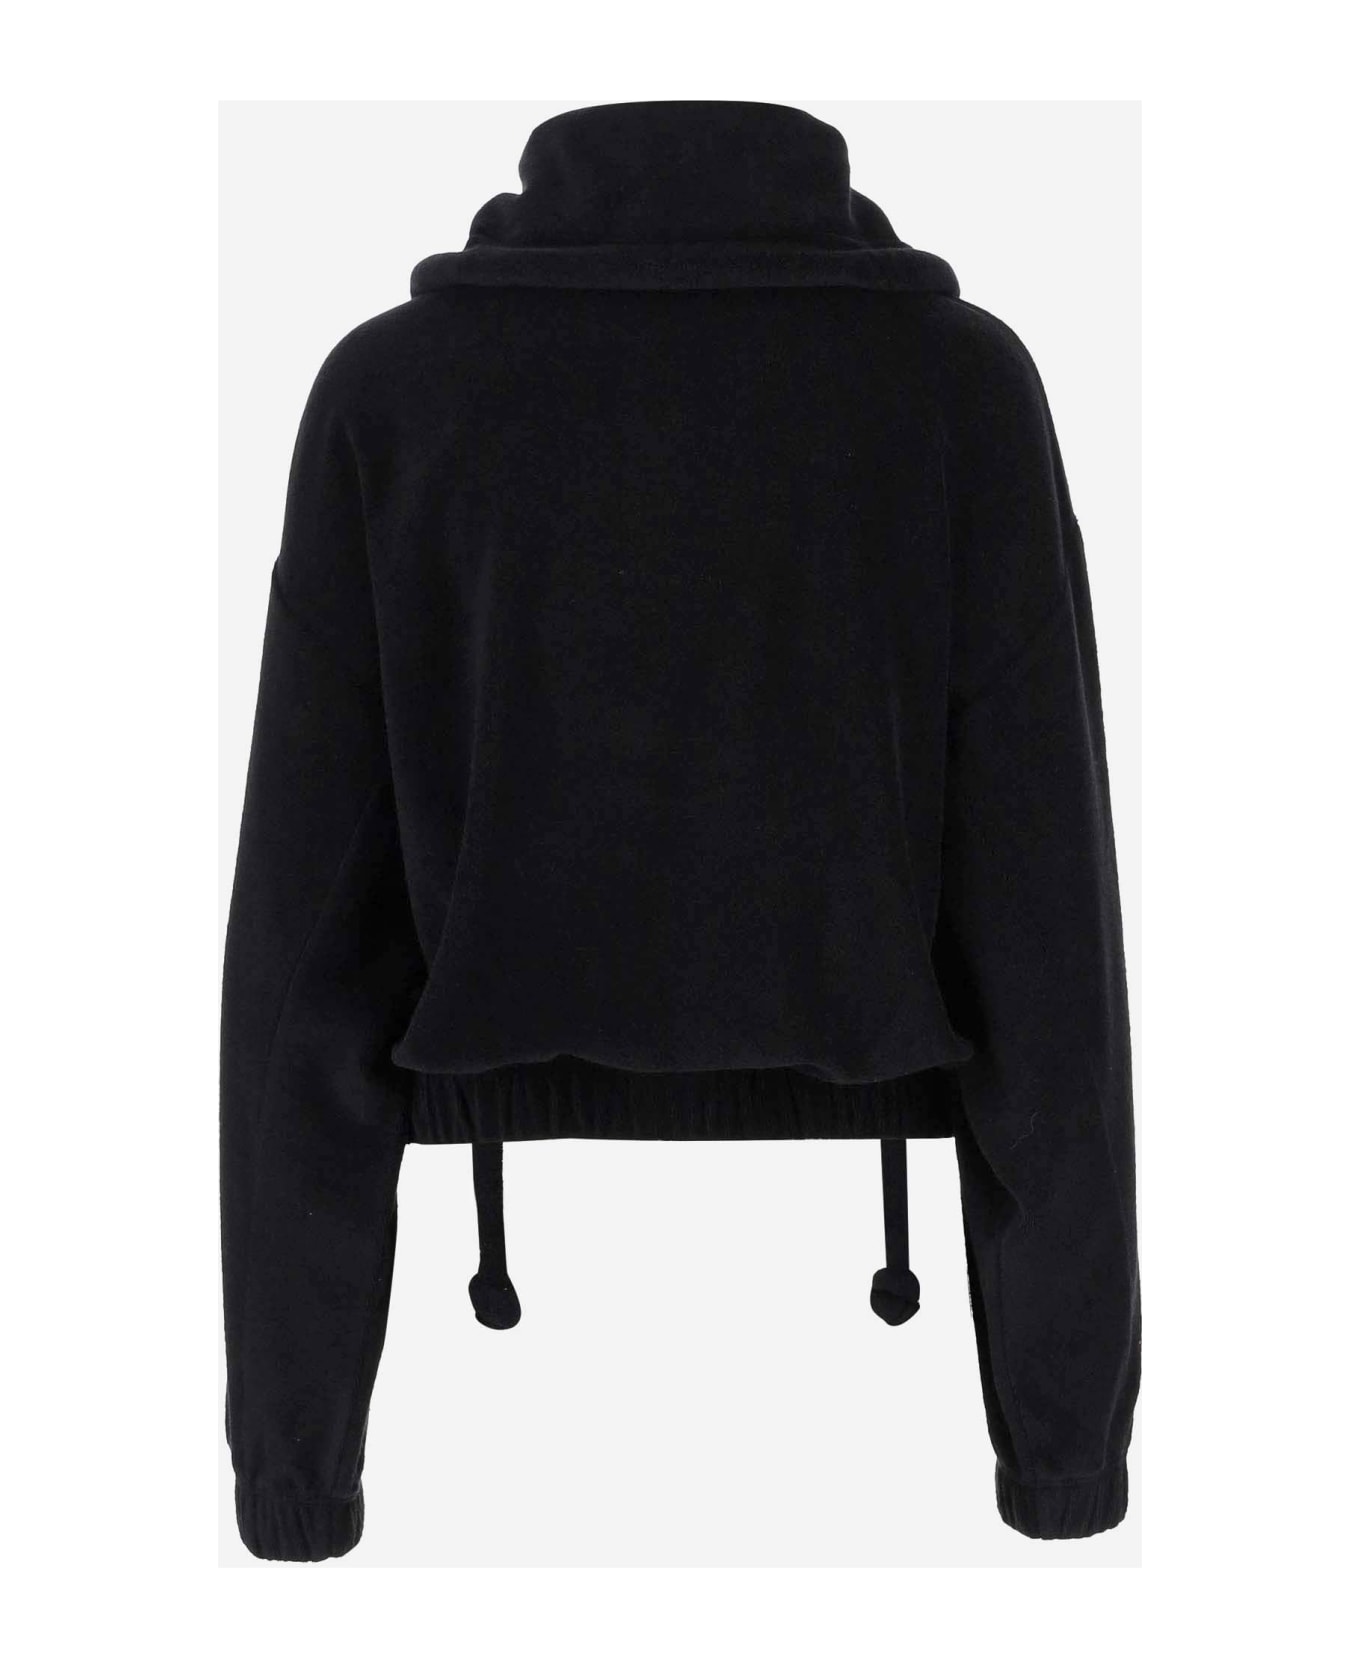 Patou Cotton Sweatshirt With Embossed Patou Signature - Black